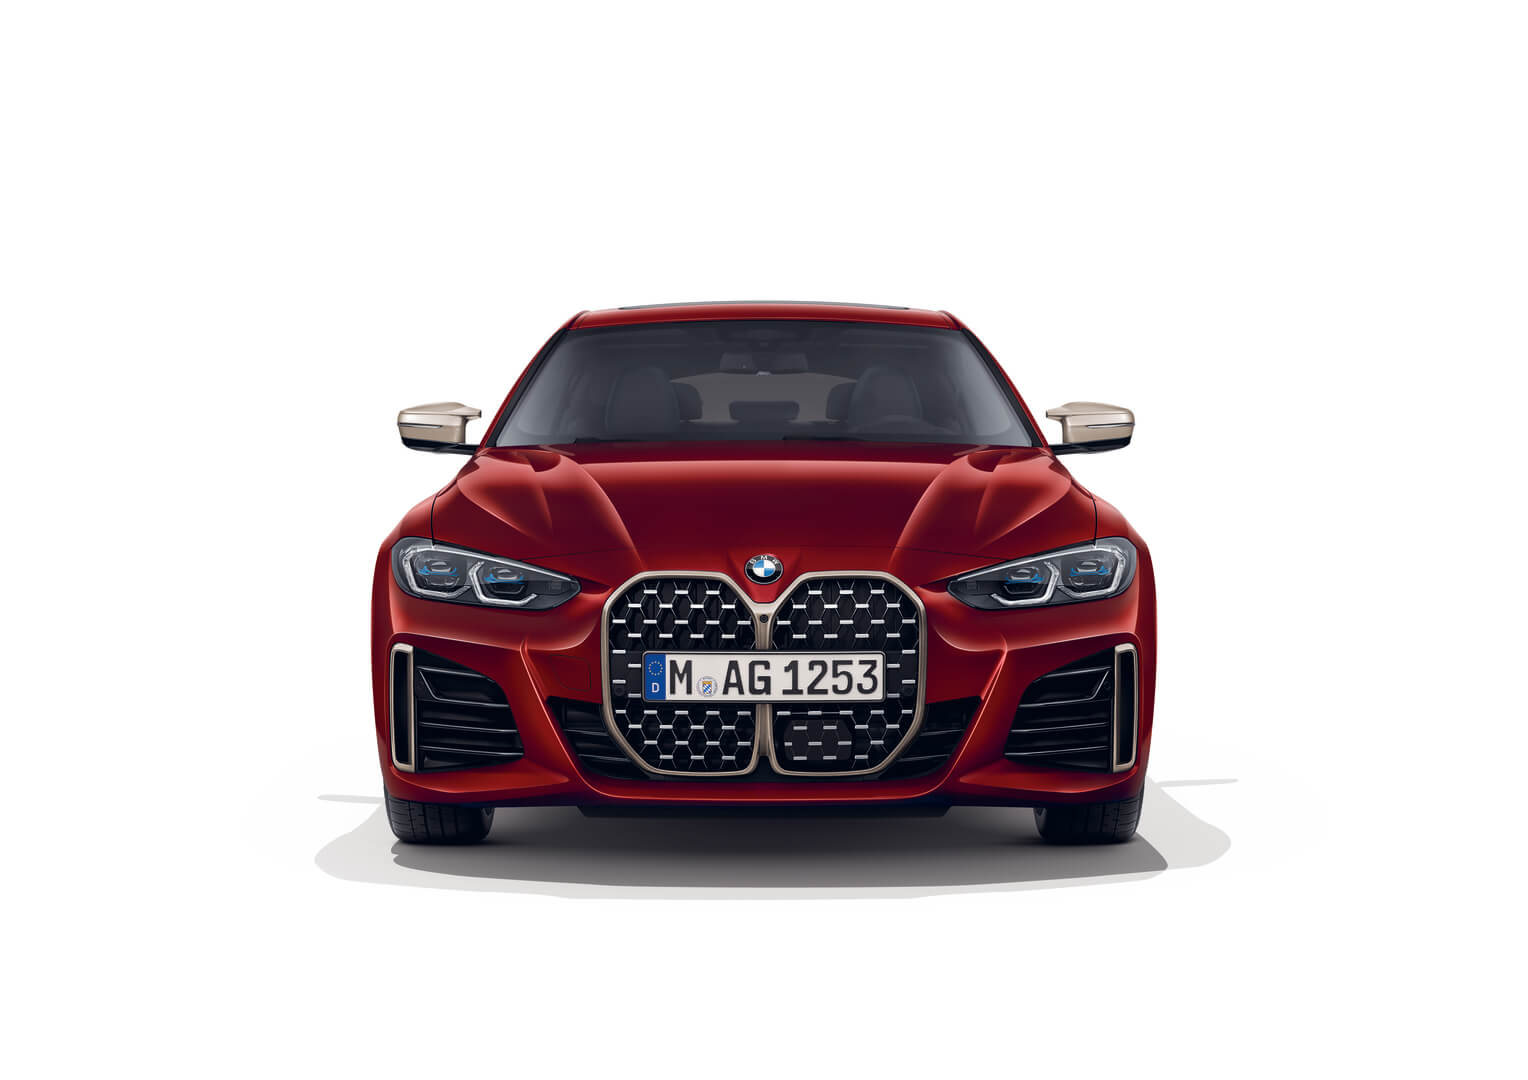 https://www.widmann-winterholler.de/fileadmin/user_upload/Fahrzeuge/Neuwagen/Landingpages/BMW/Modell/BMW_4er/BMW_4er_Gran_Coupe/bmw-4er-gran-coupe-red-detail-frontansicht.jpg